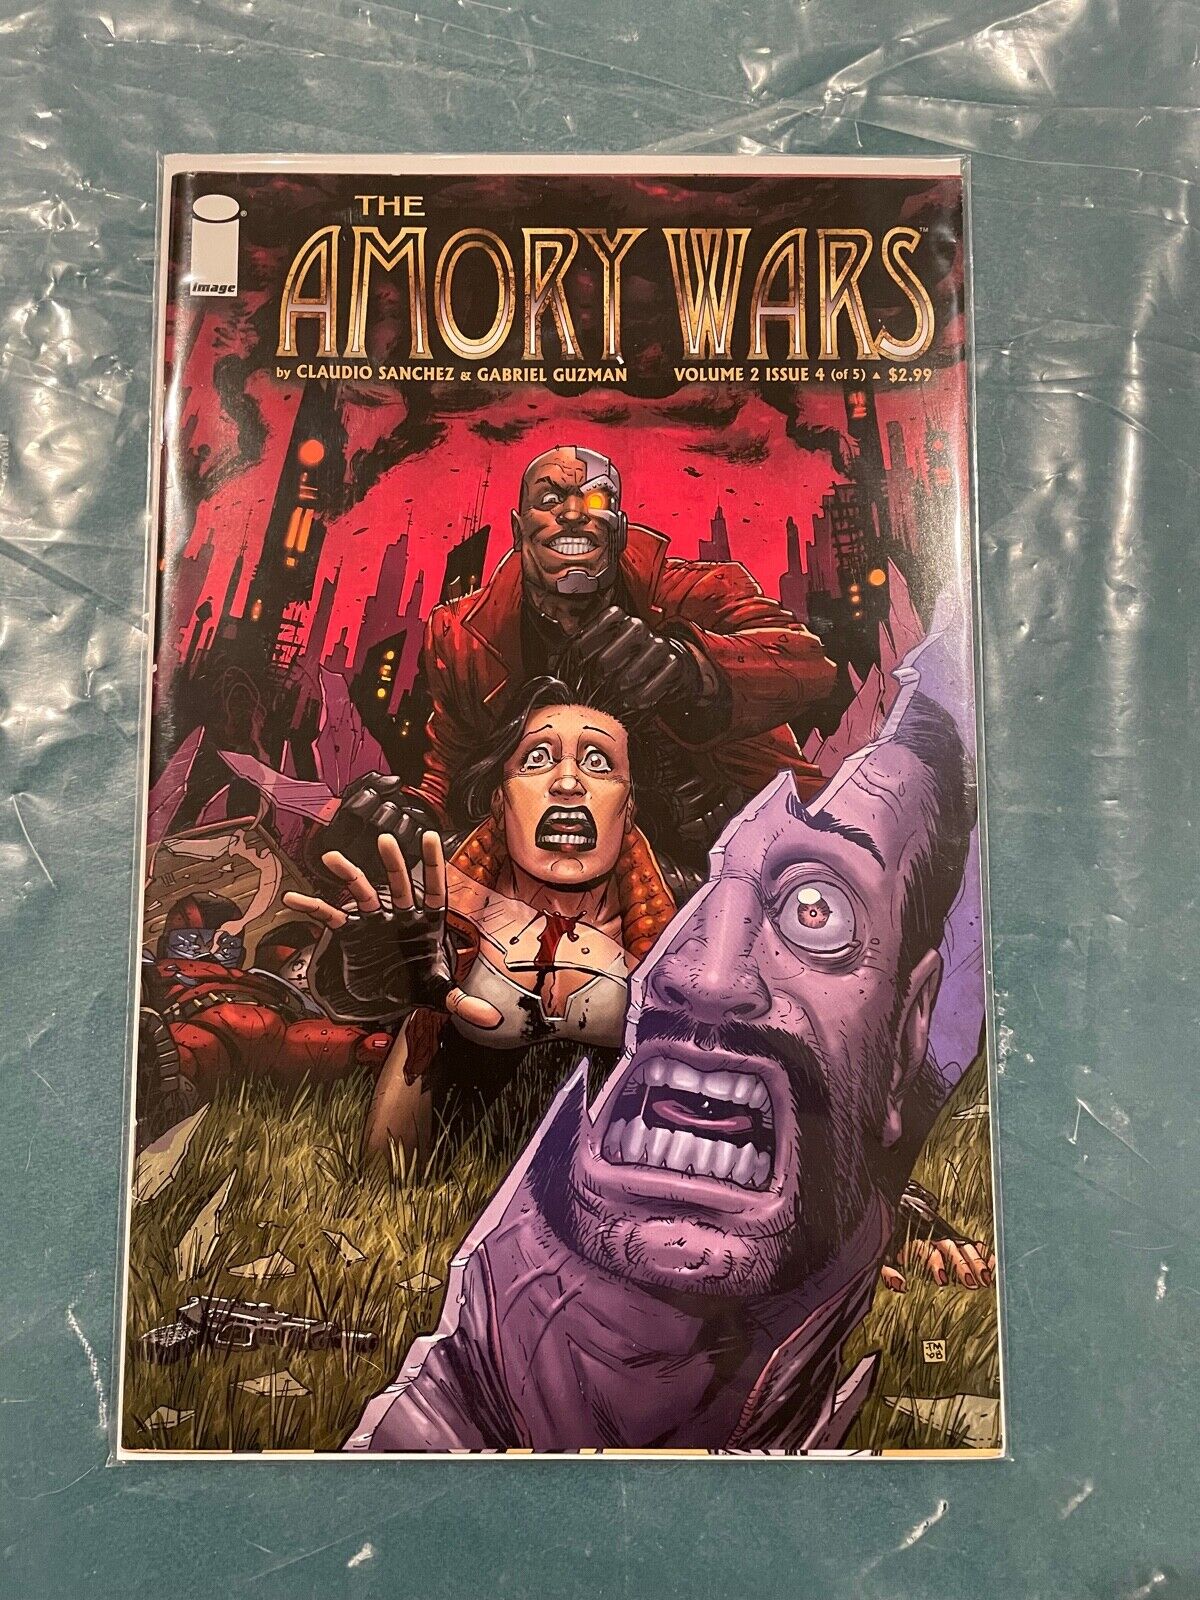 The Amory Wars Vol 2 #4a | eBay